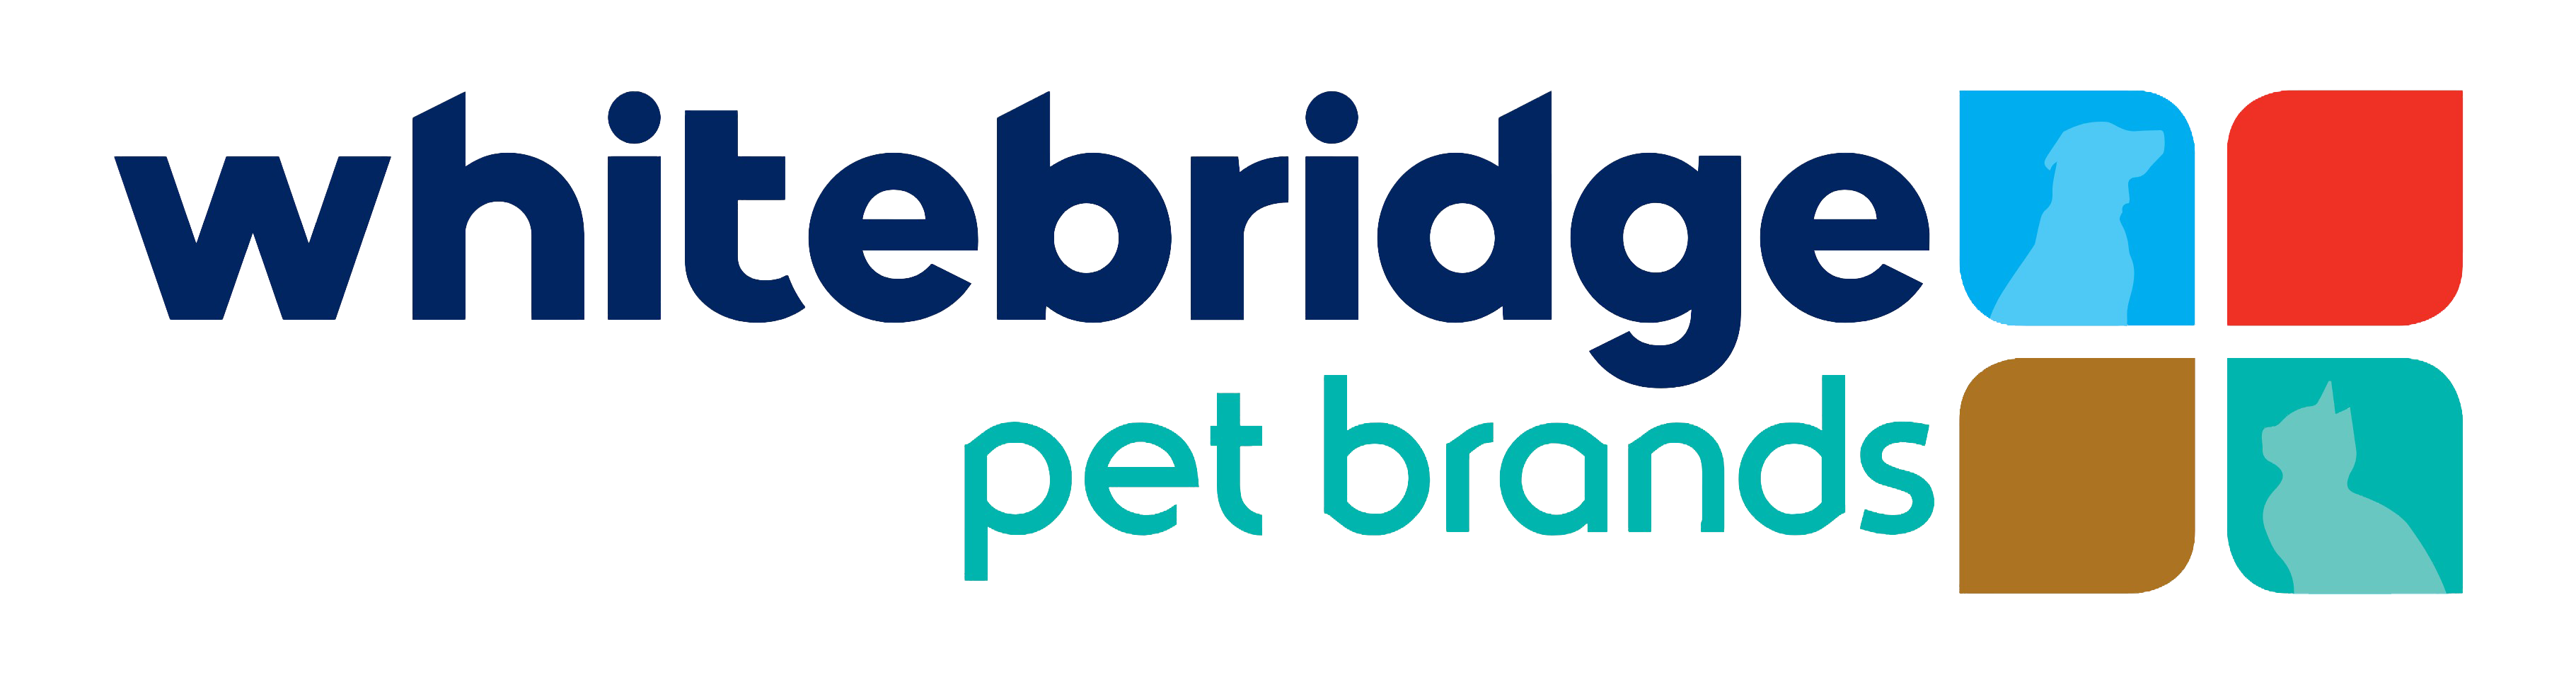 Whitebridge_Pet_Brands.png